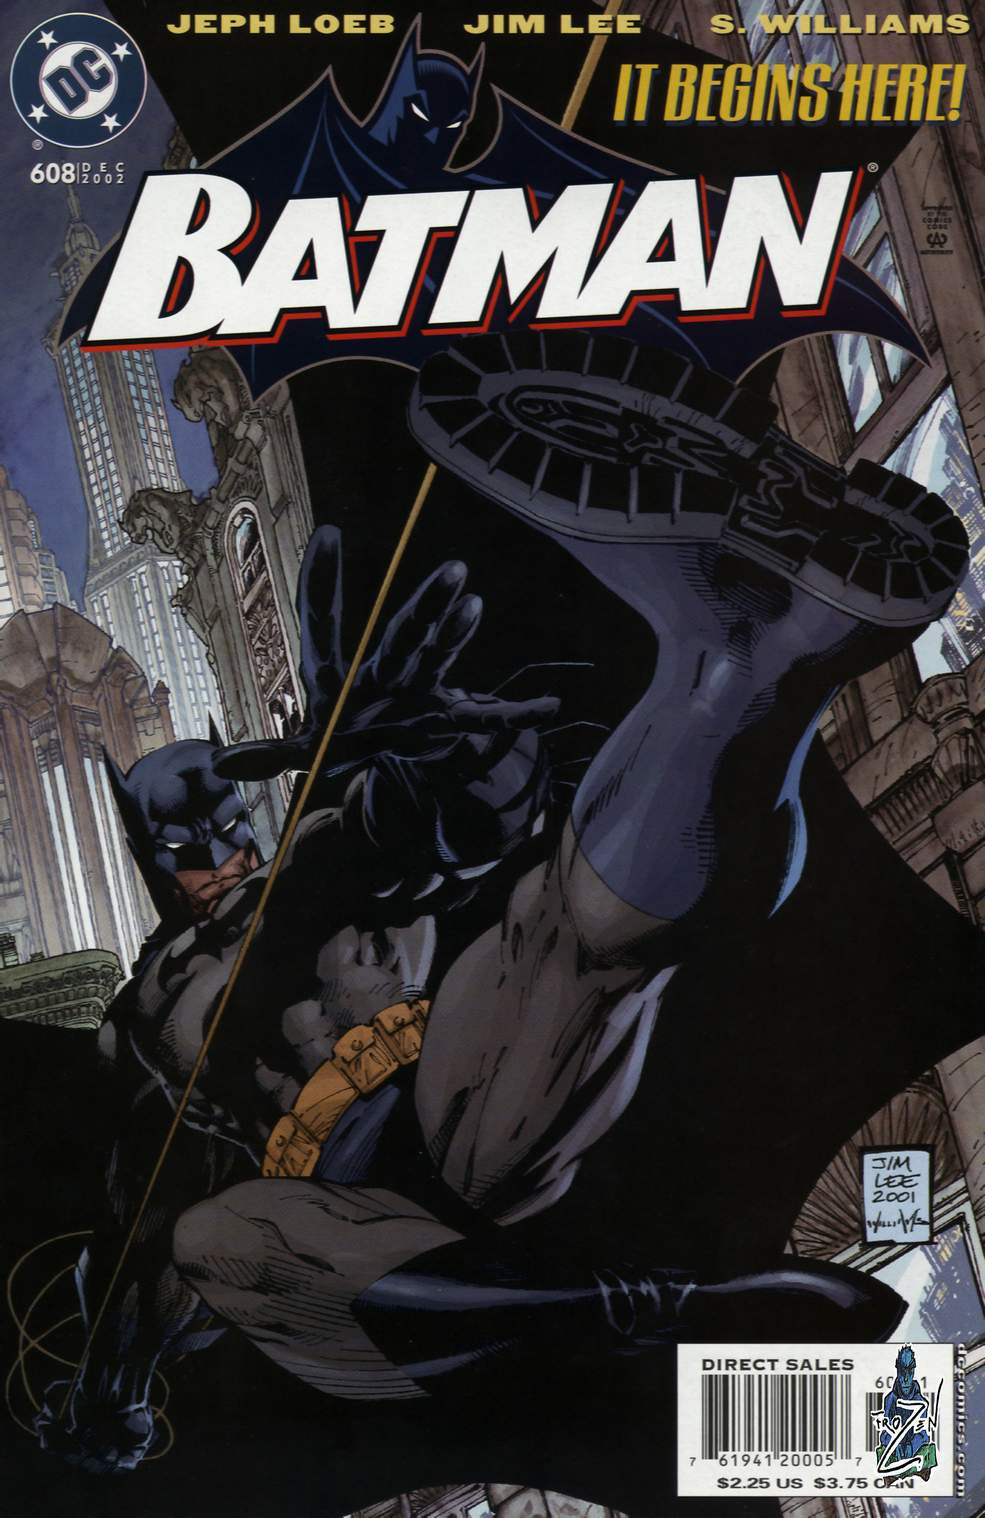 Batman Hush Issue 1 | Read Batman Hush Issue 1 comic online in high  quality. Read Full Comic online for free - Read comics online in high  quality .|